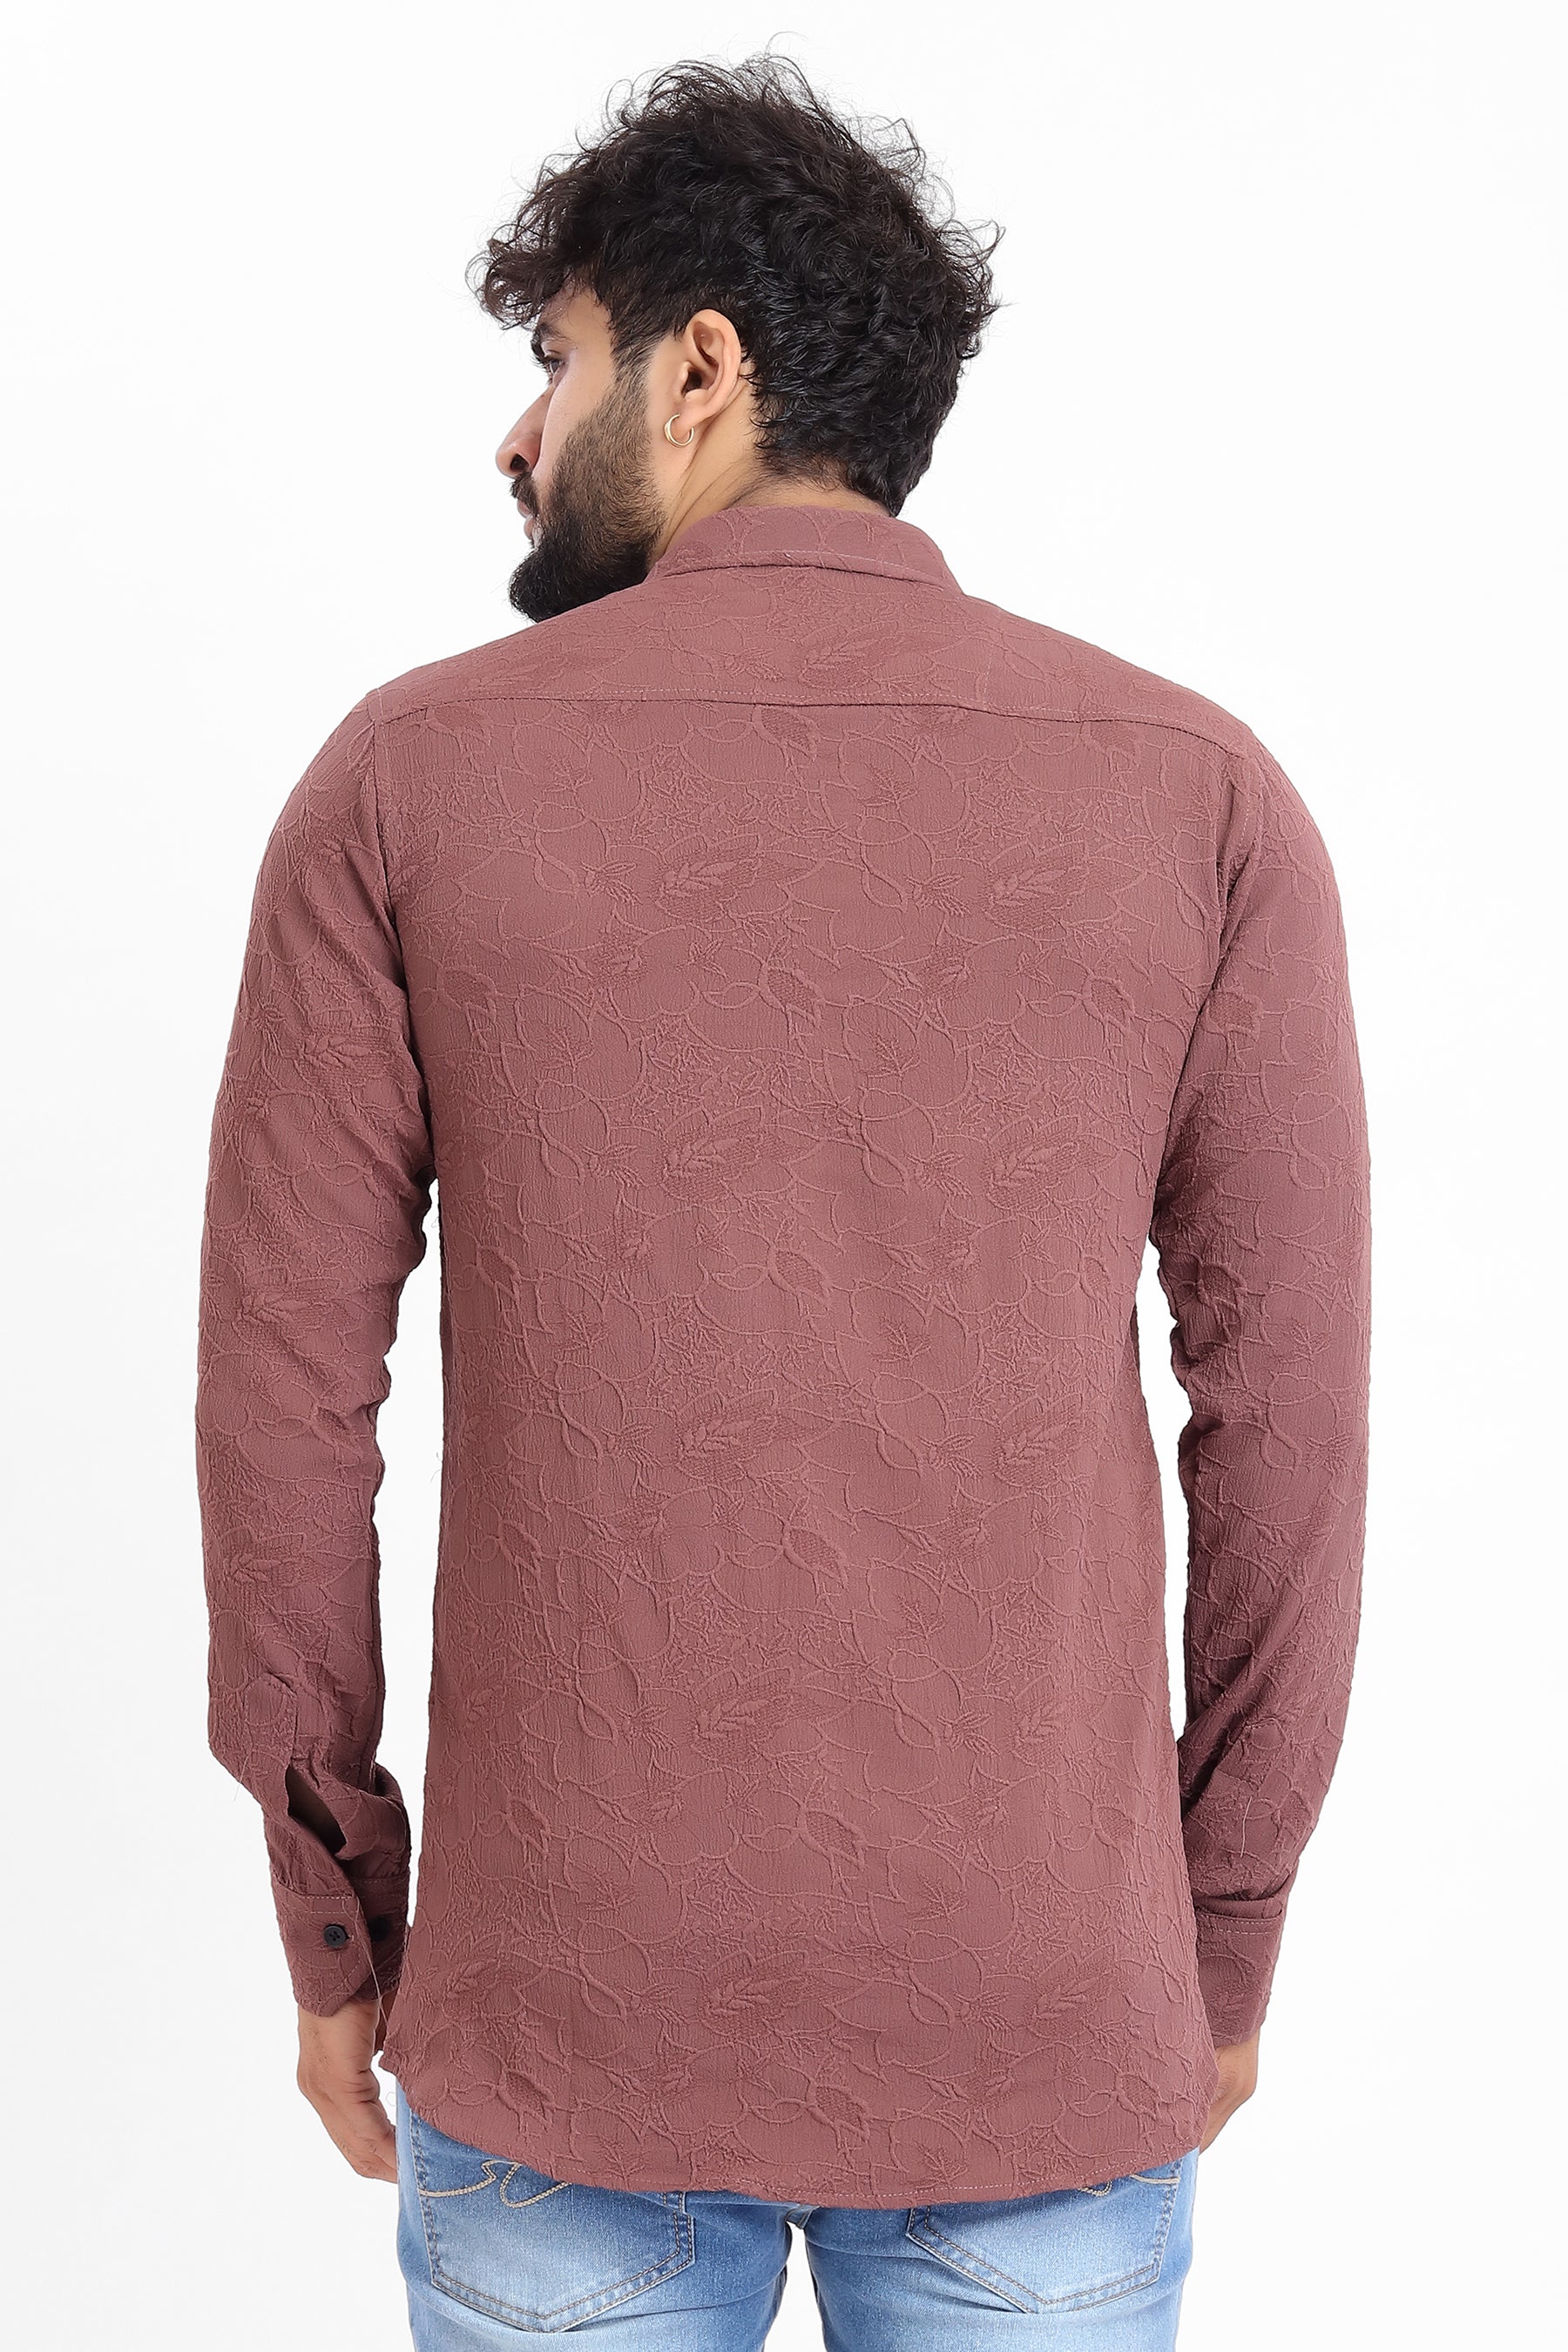 Abstract Jacquard Burgundy Shirt